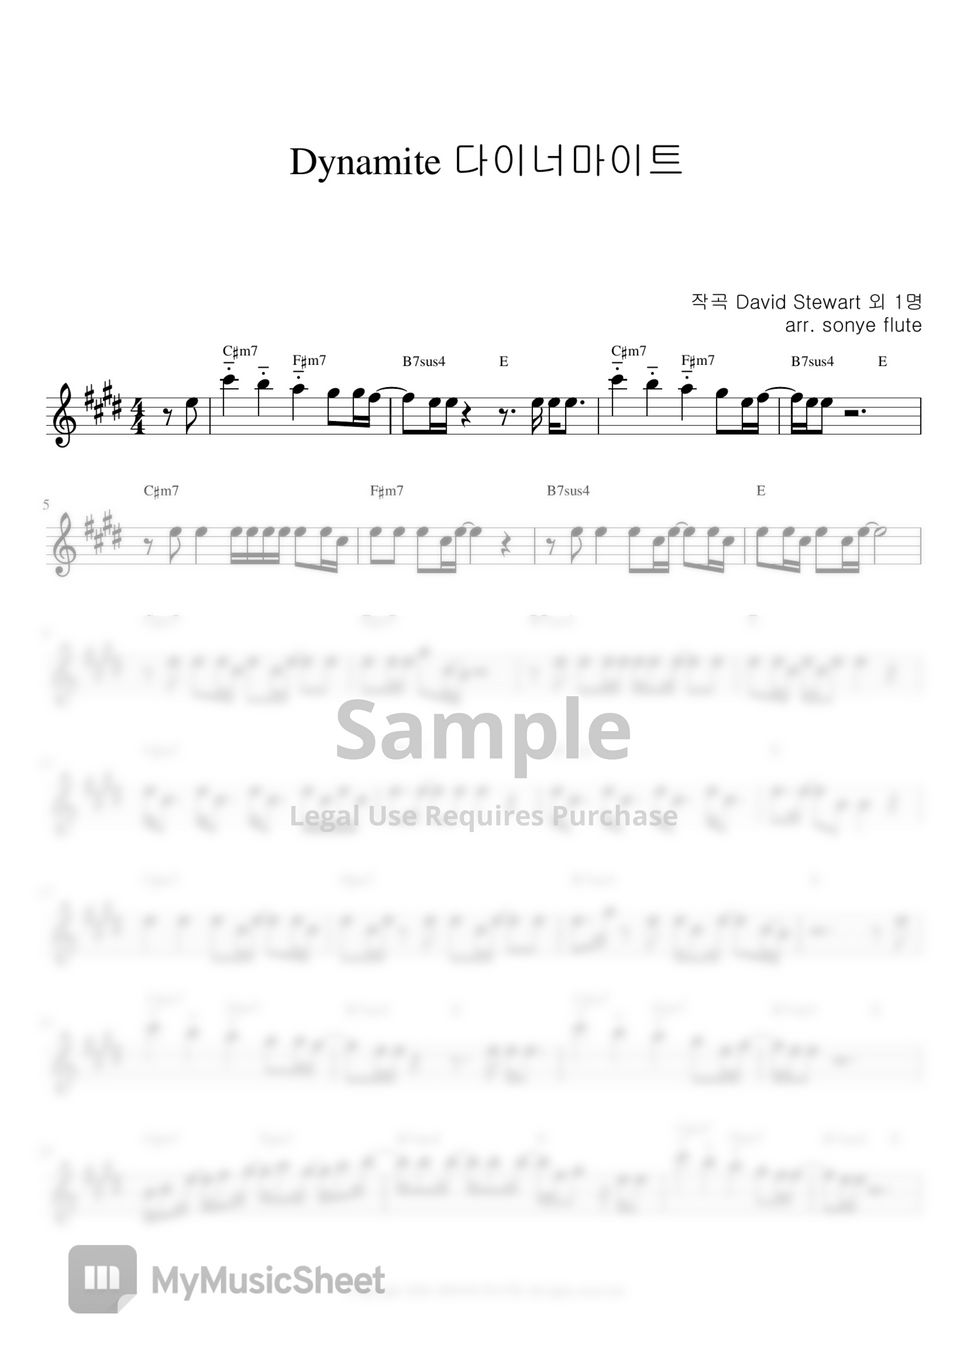 BTS - Dynamite (Flute Sheet Music) by sonye flute